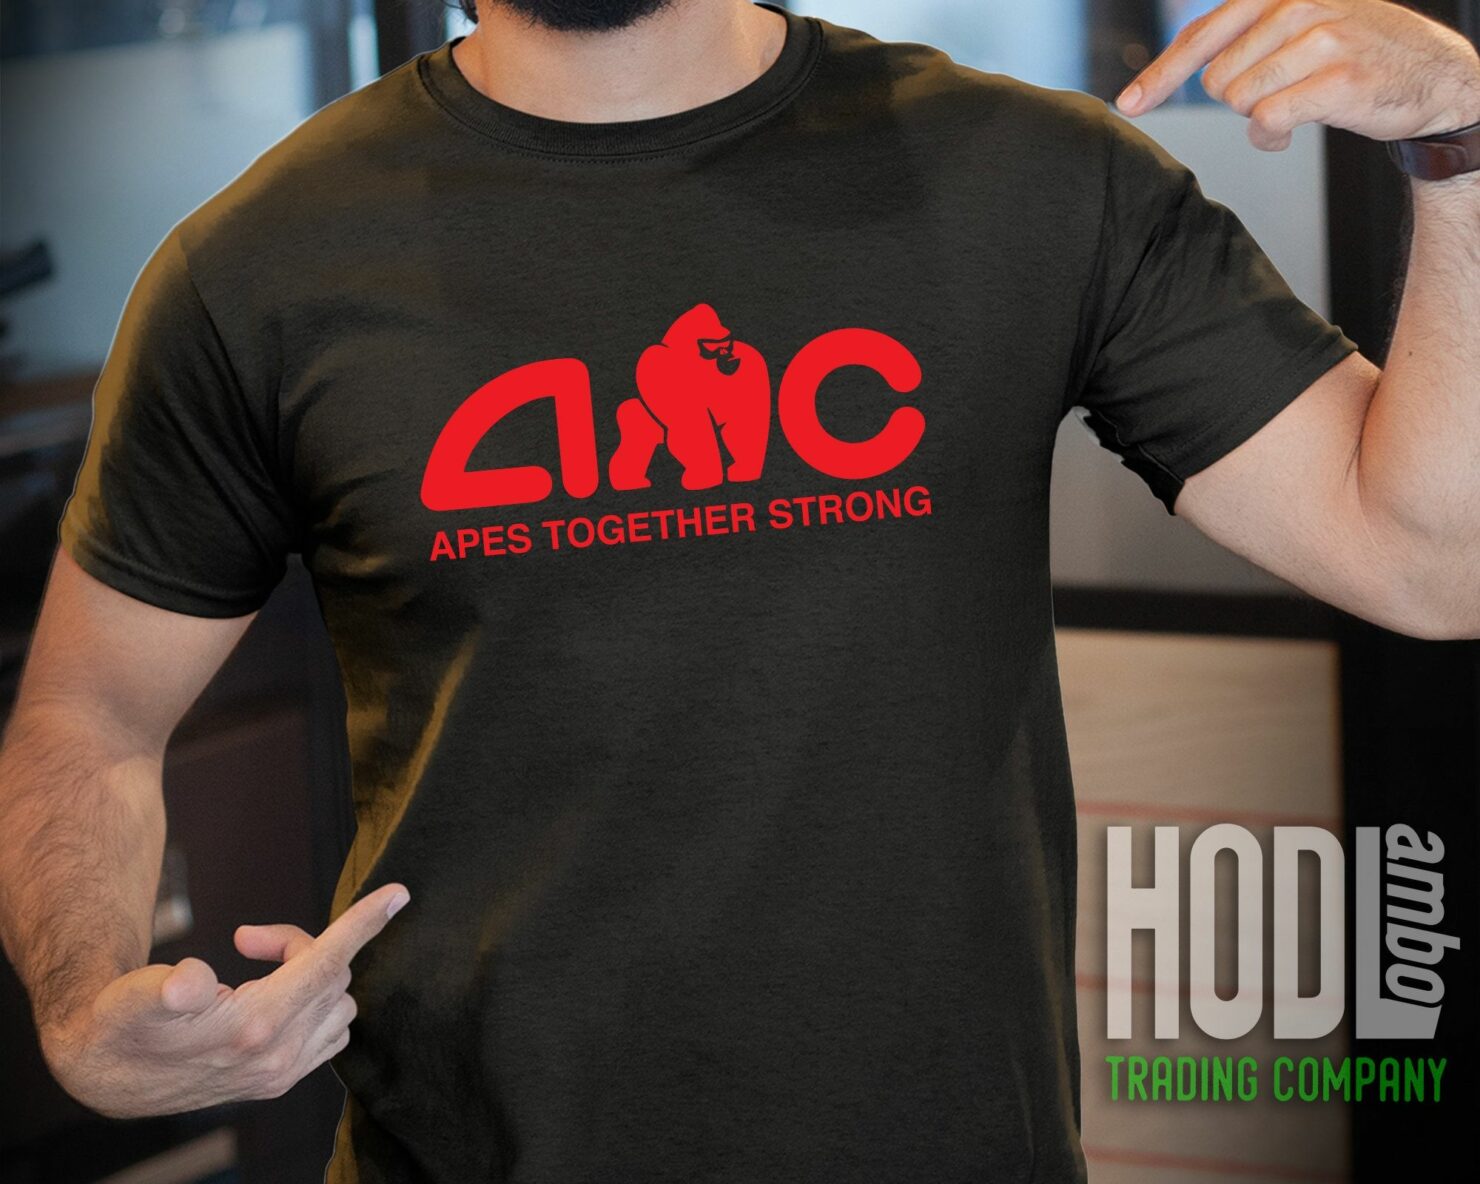 Short squeeze humster combat где находится. Футболка AMC. Apes together strong. AMC Apes. Футболка AMC Armwrestling.